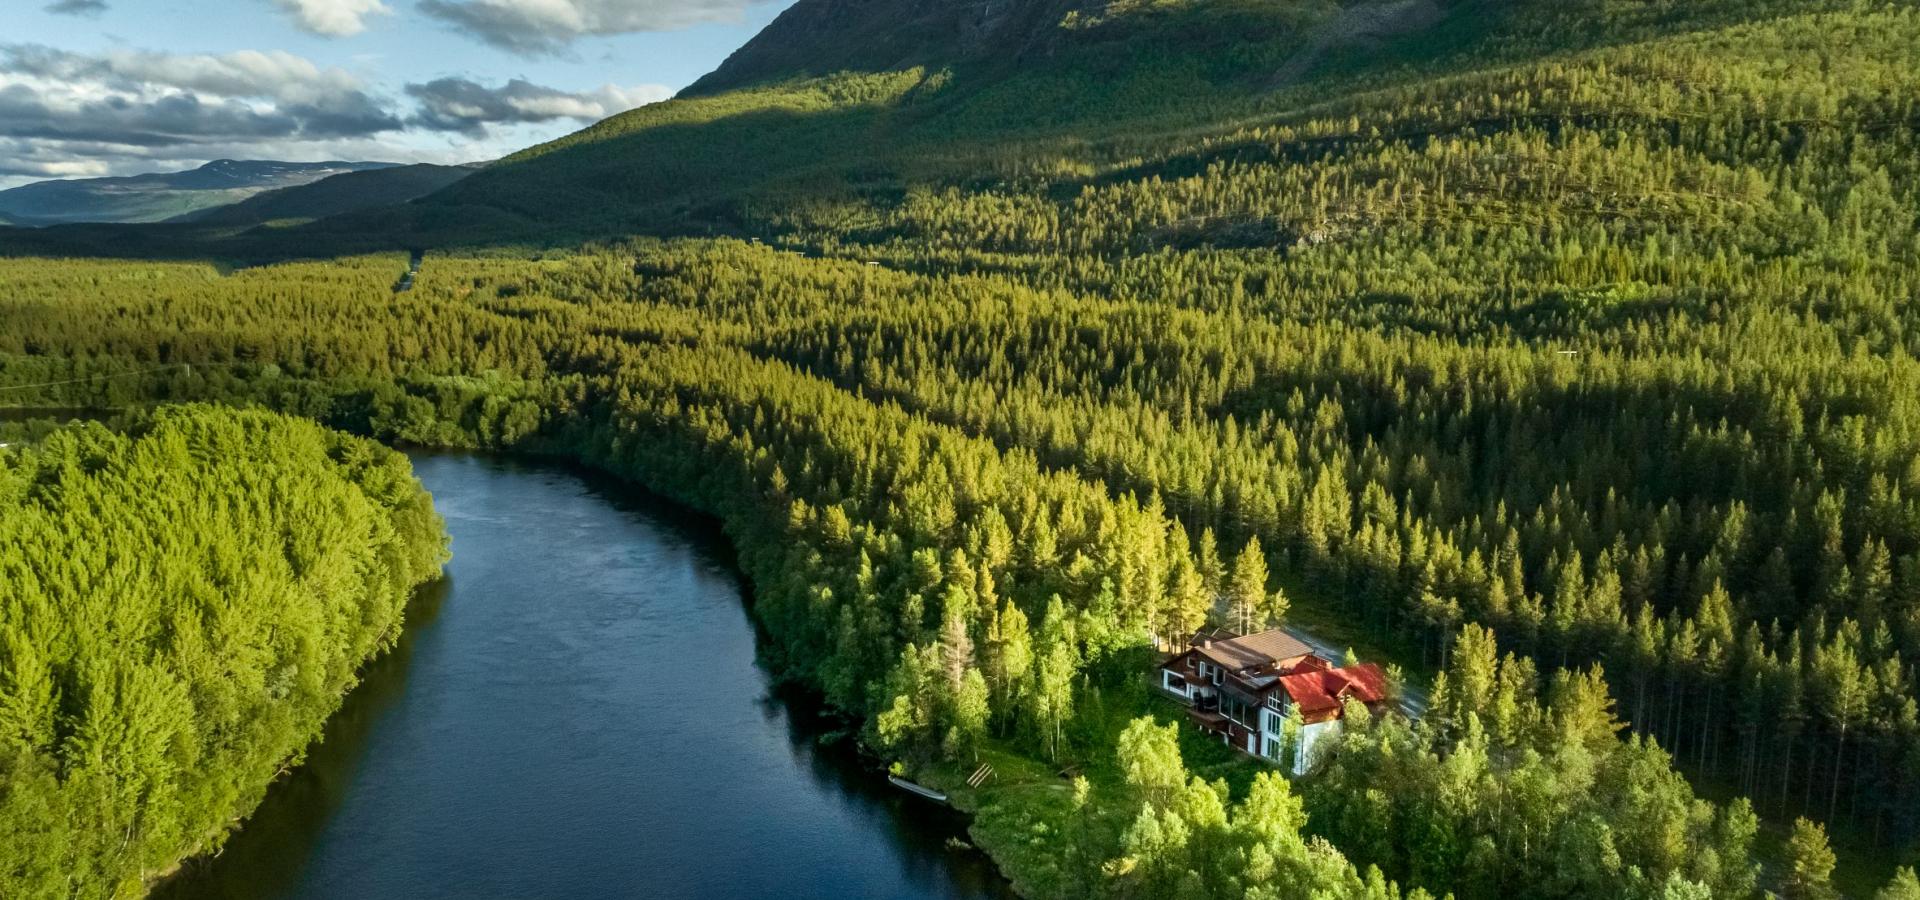 Reisastua Lodge ved Reisaelva i Nord Norge